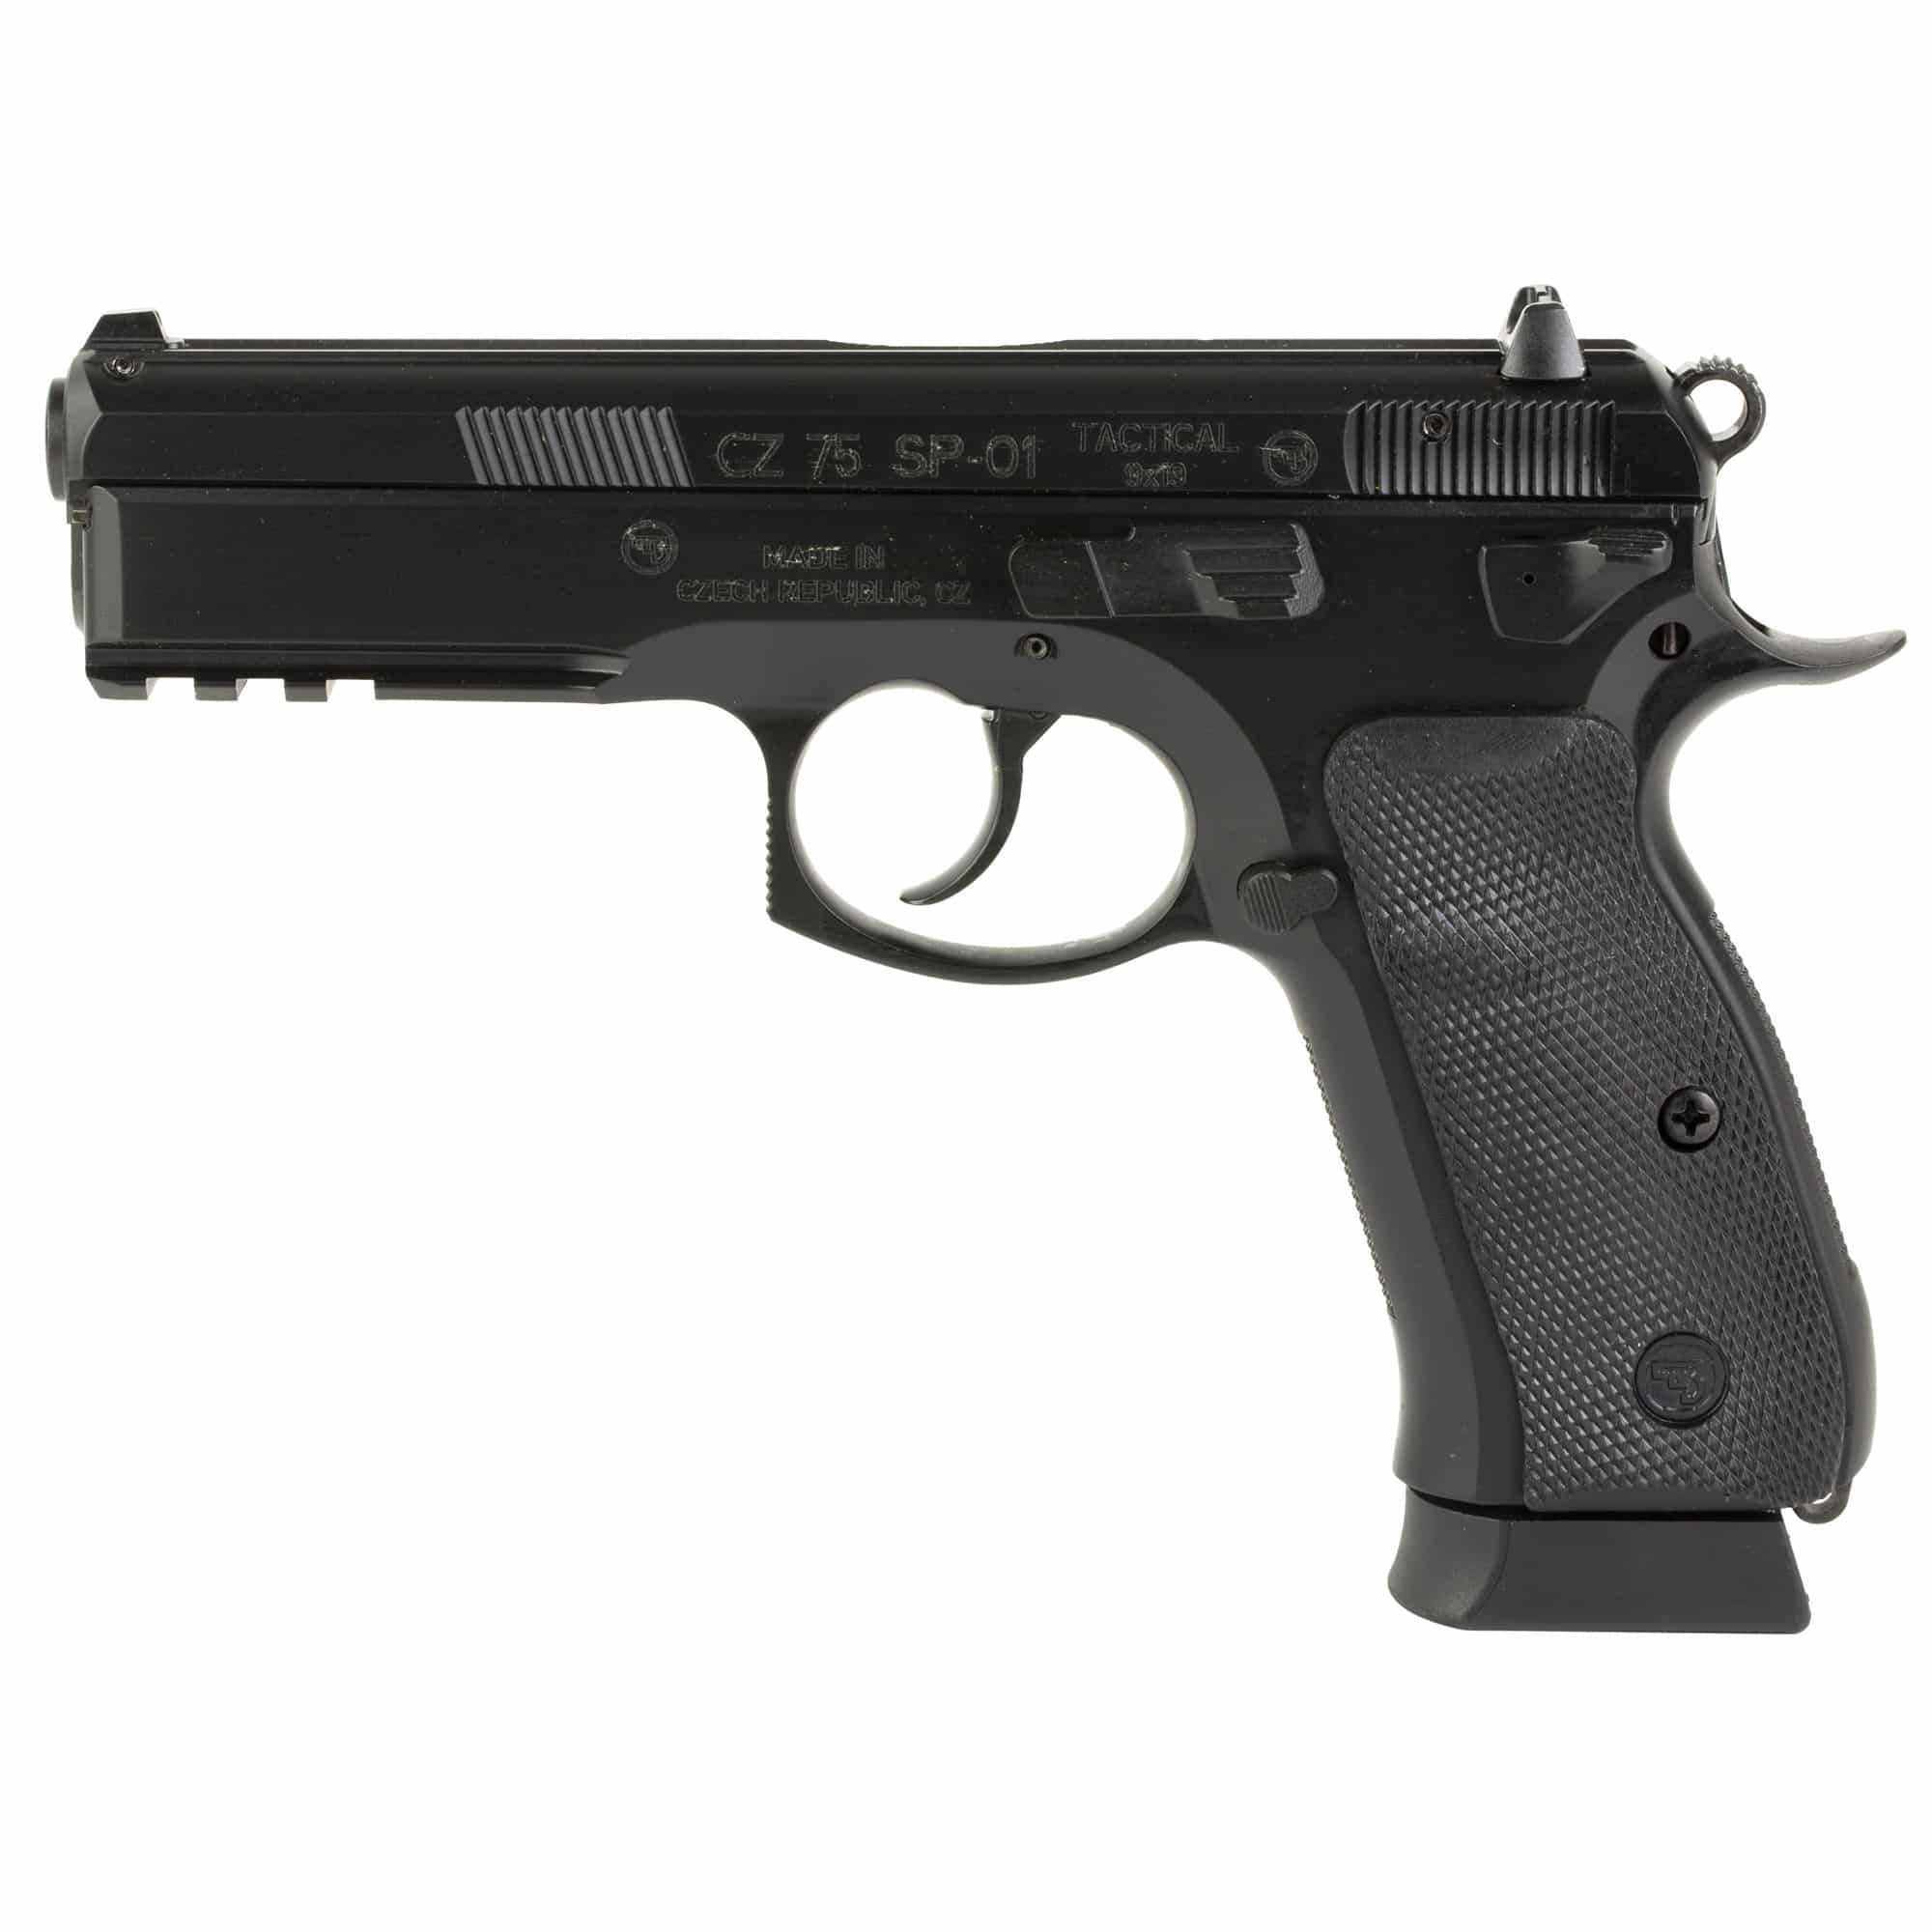 https://cityarsenal.com/product/cz-usa-75-sp-01-tactical-da-sa-9mm-full-size-pistol-black-89353/